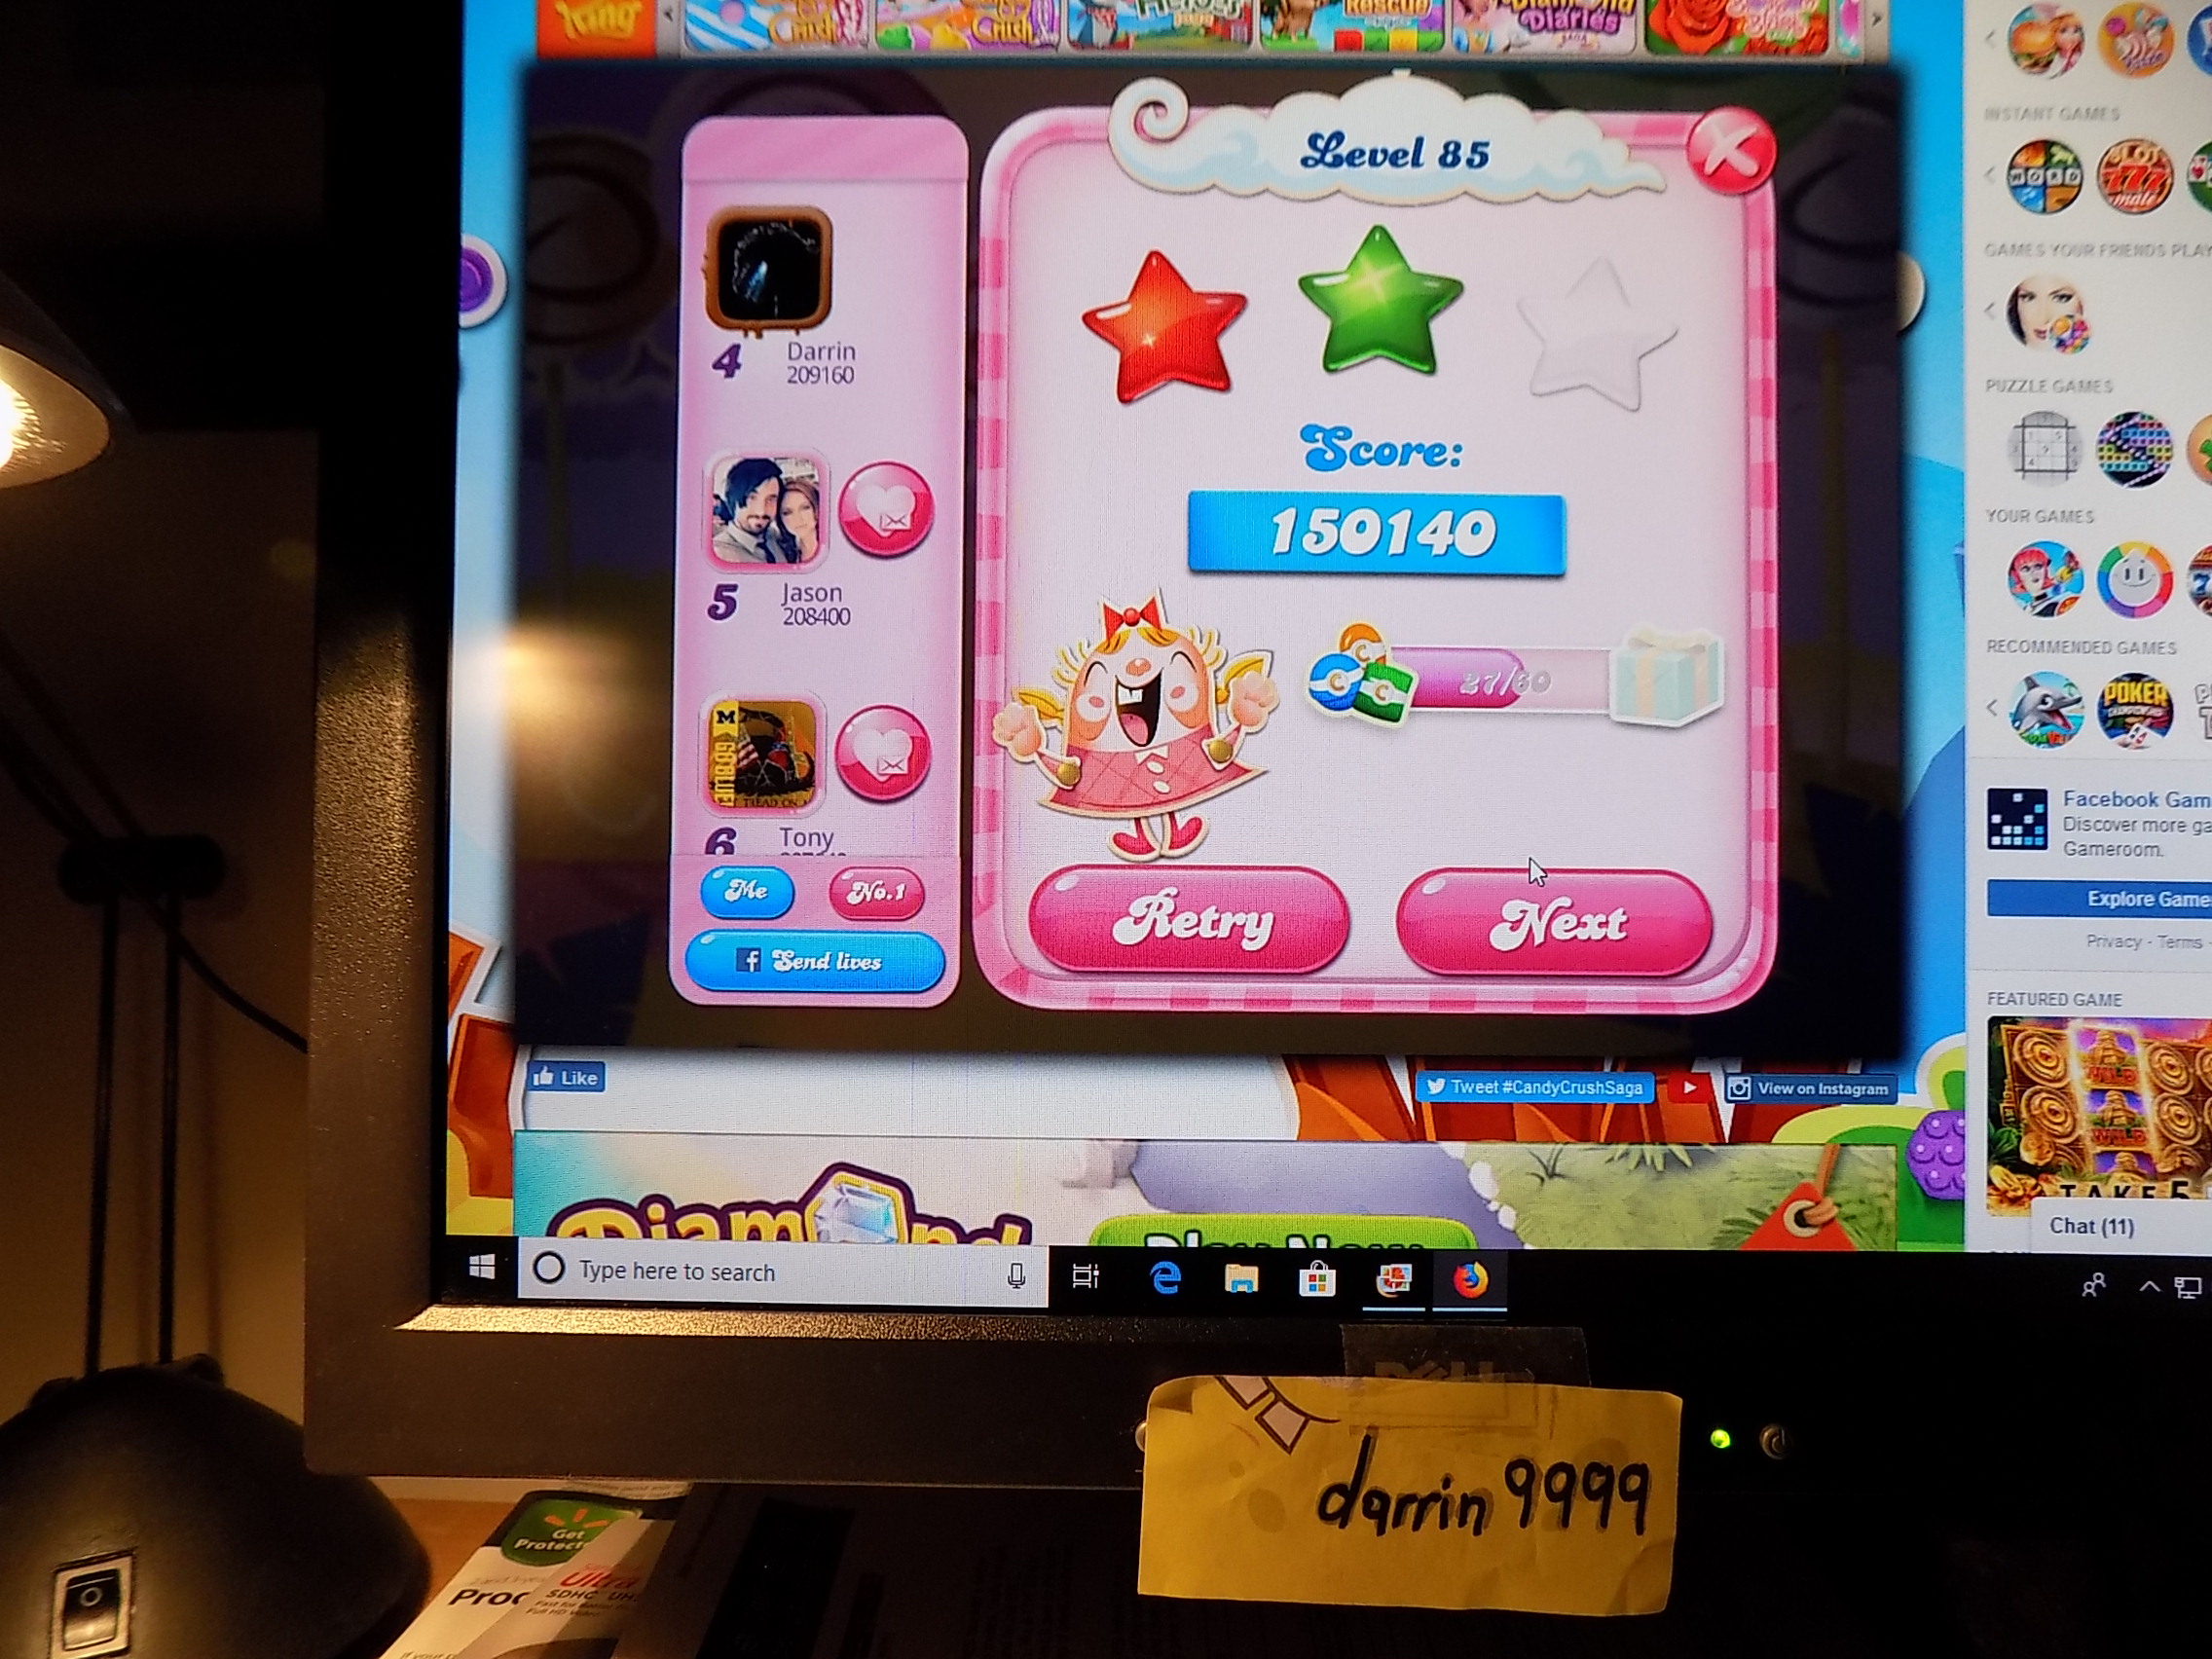 Candy Crush Saga: Level 085 150,140 points